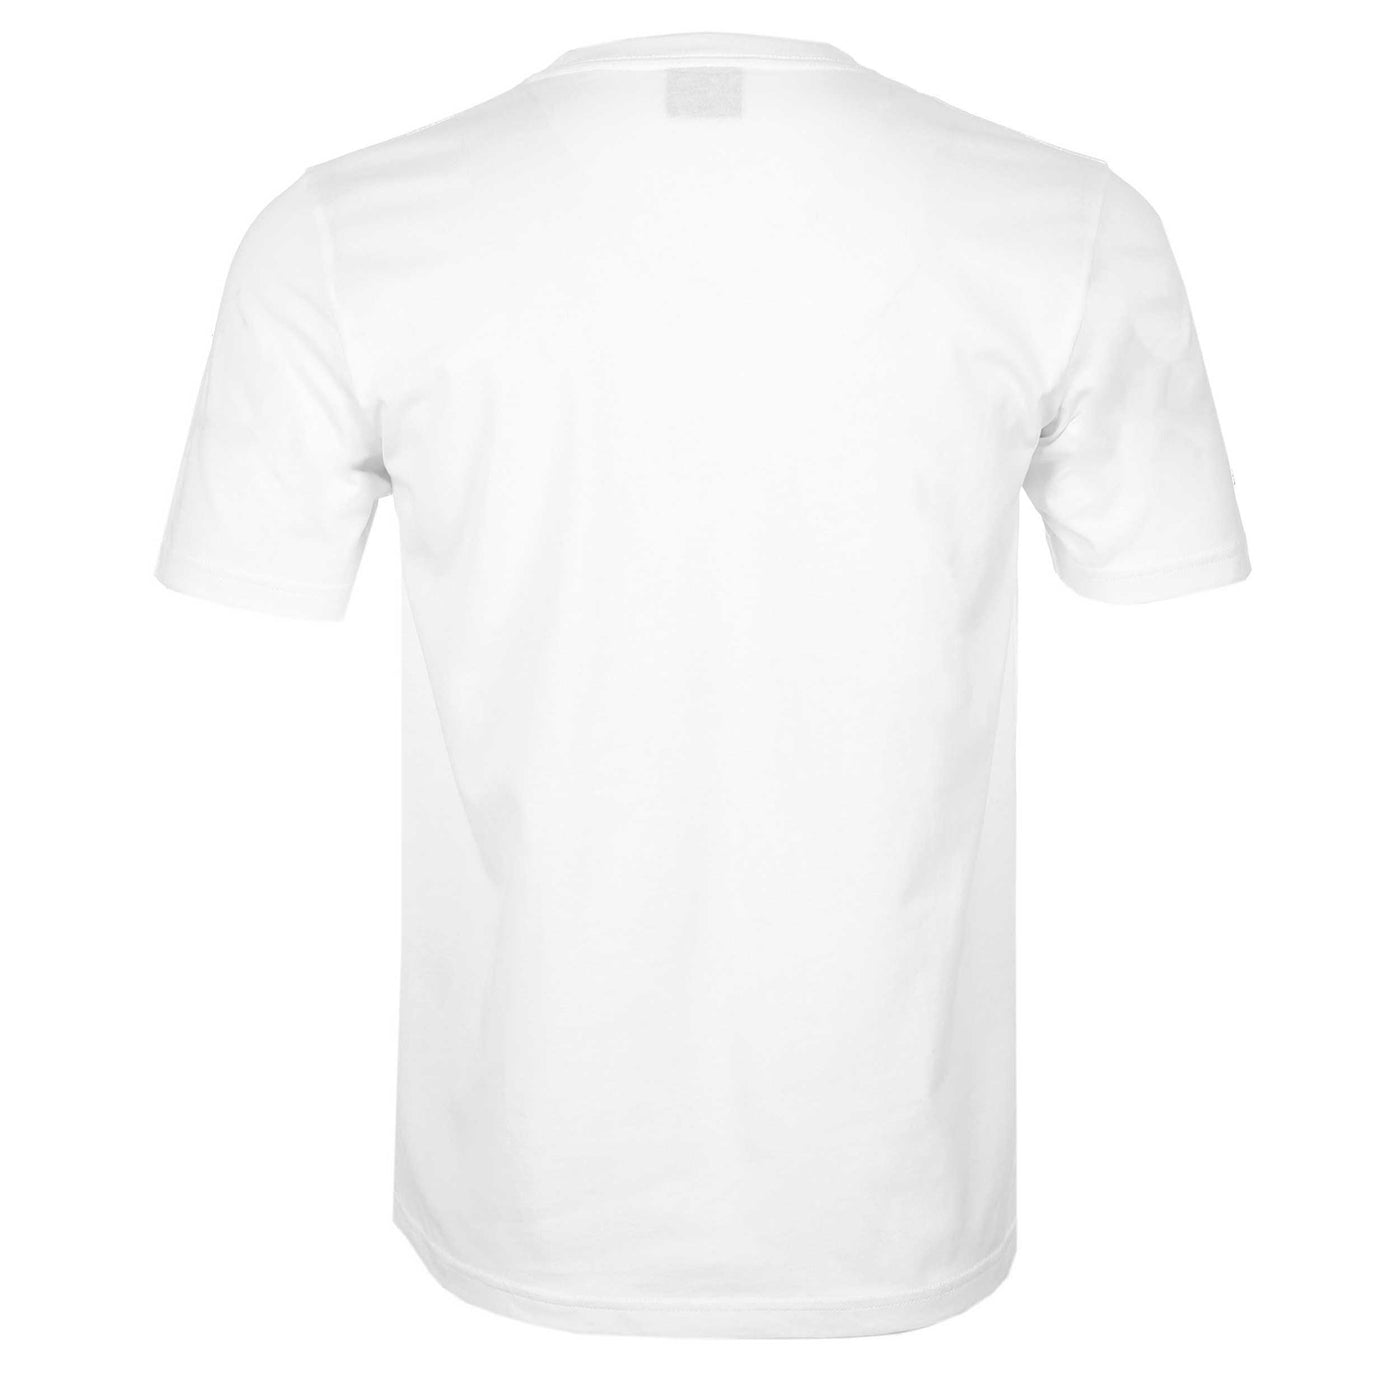 Paul Smith Zebra Square T Shirt in White Back